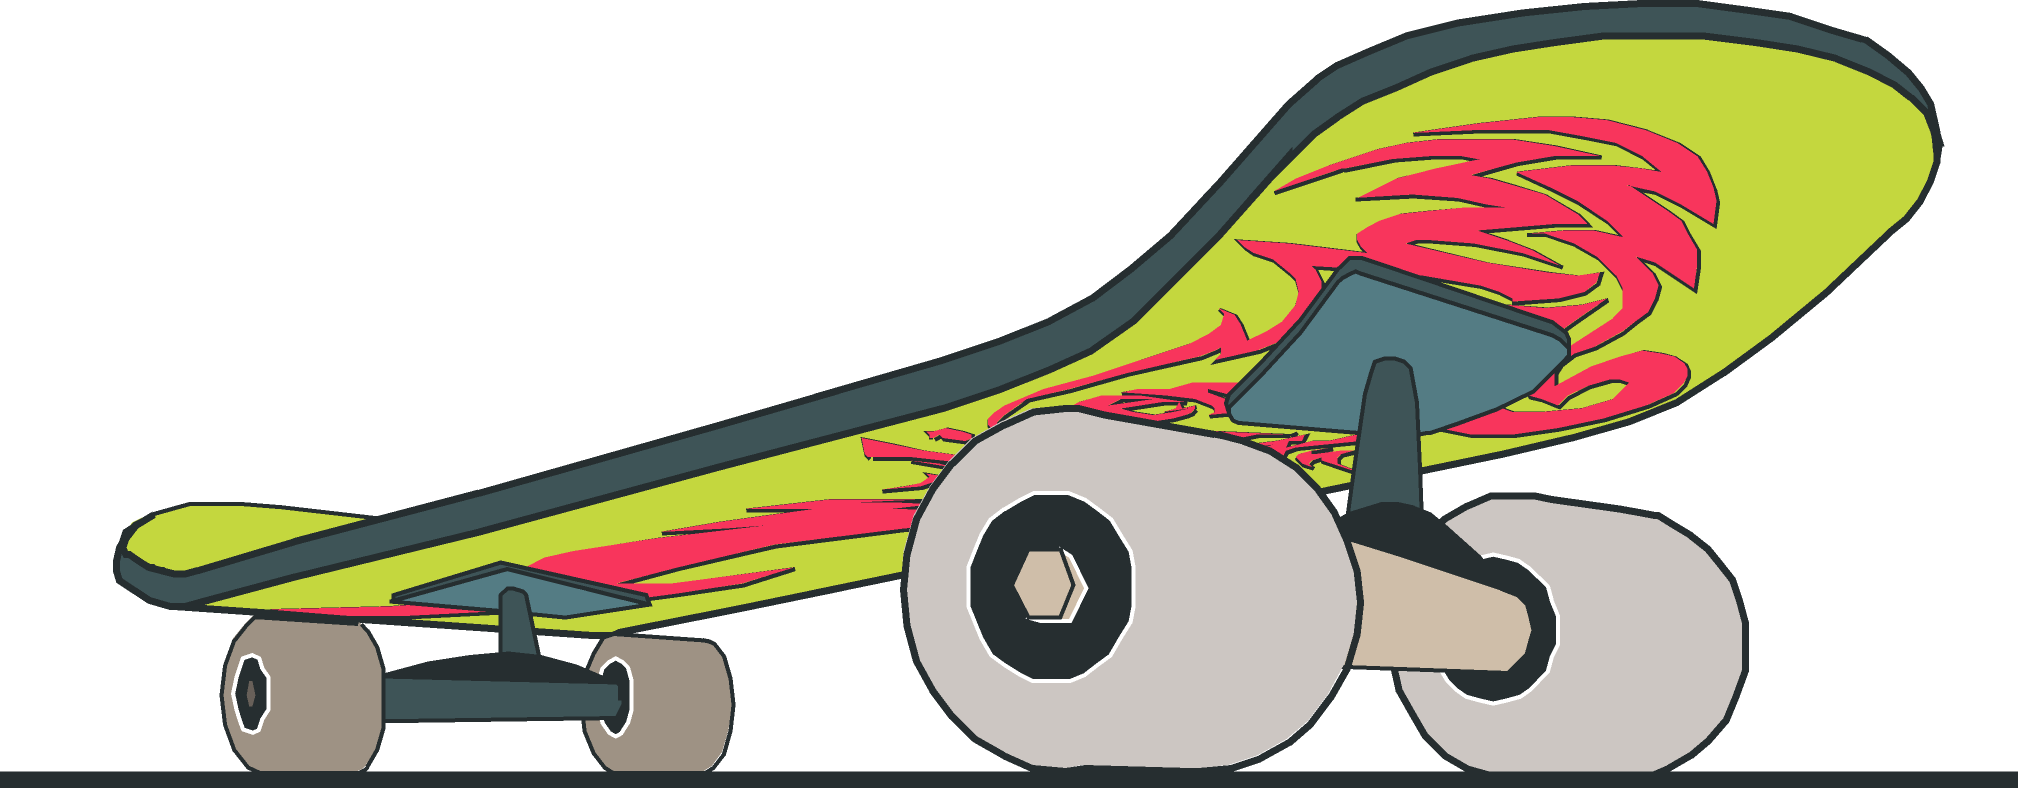 Skateboard clipart image